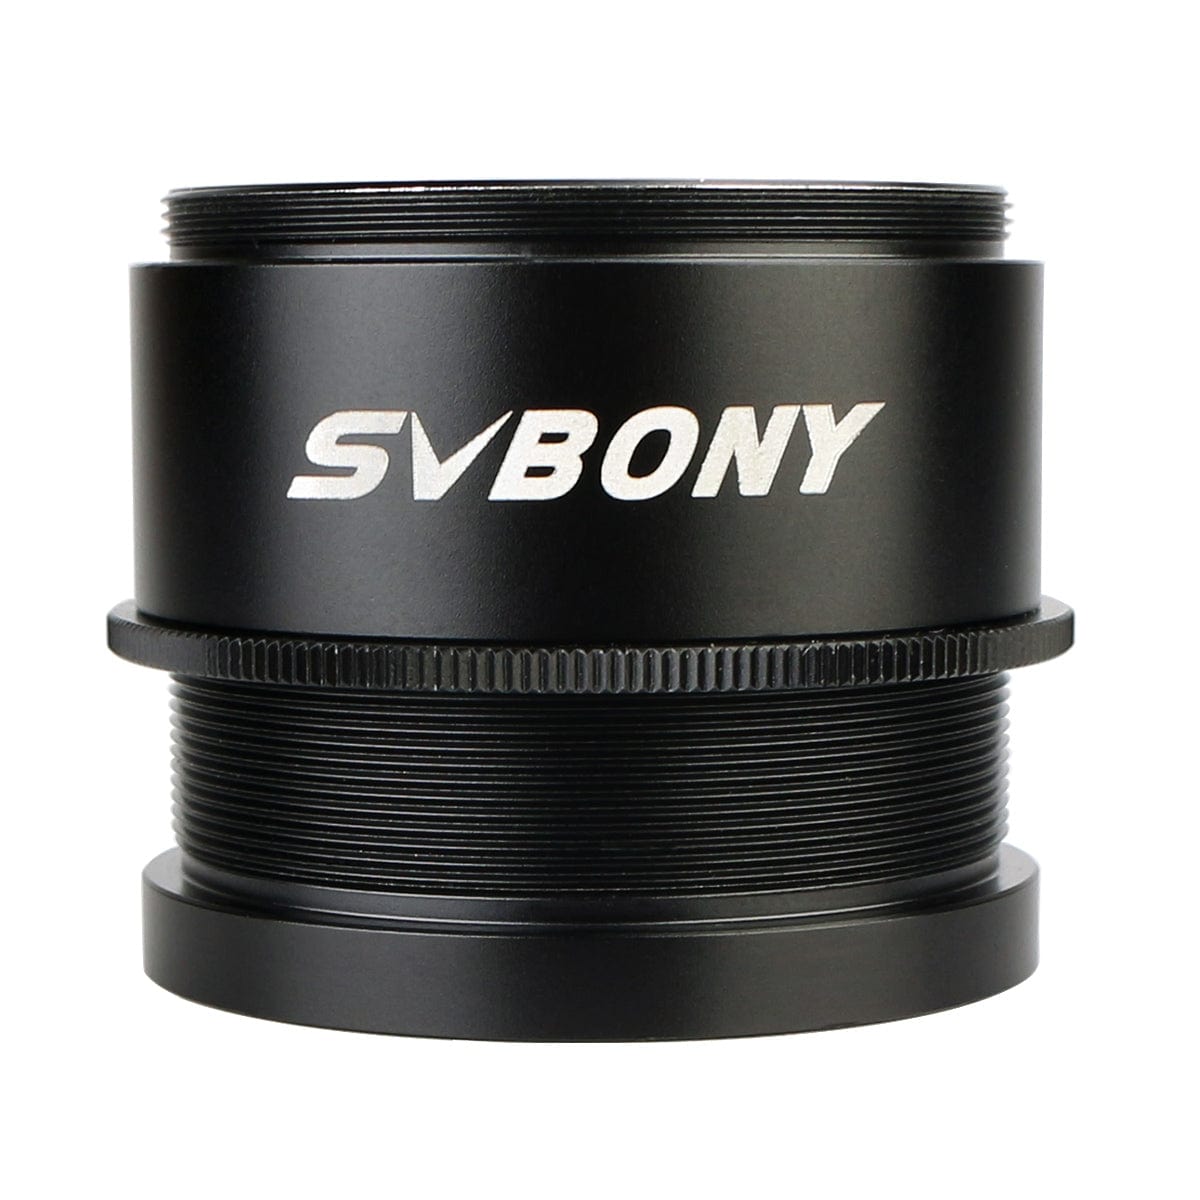 Svbony Accessory Svbony SV109 Variable M42 Thread Extension/Spacer Tube - F9180A